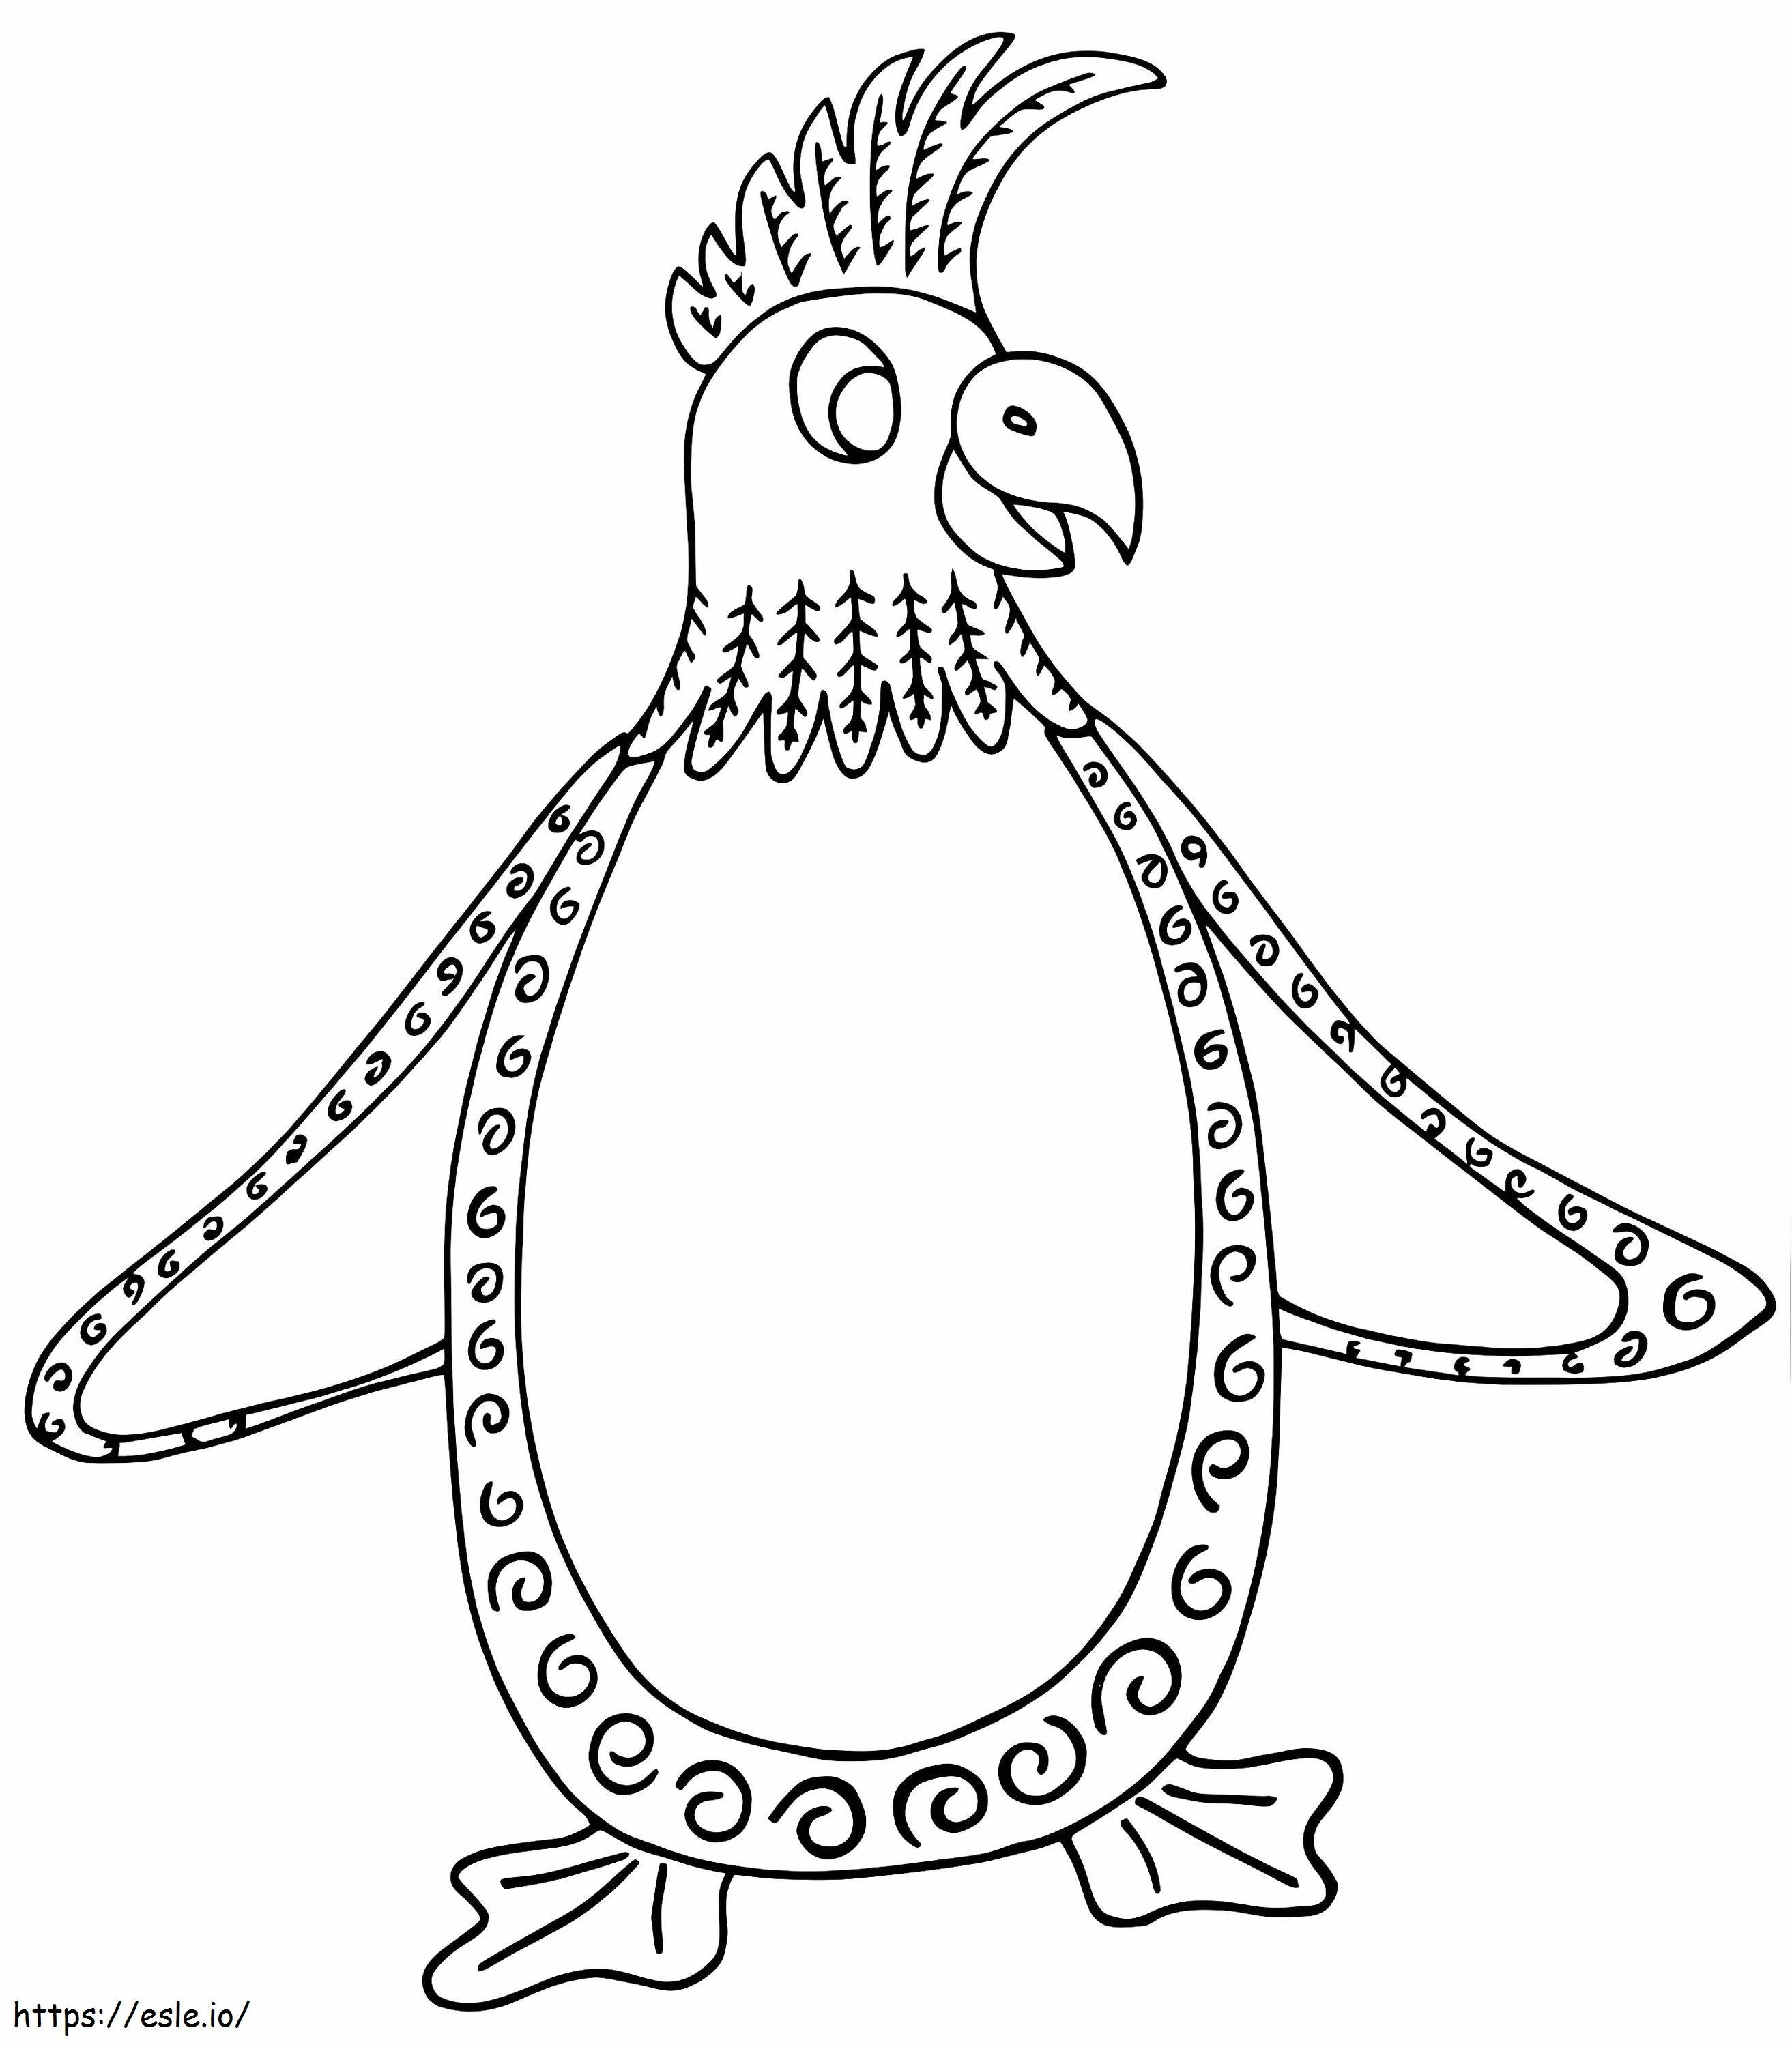 Pinguim Alebrijes para colorir